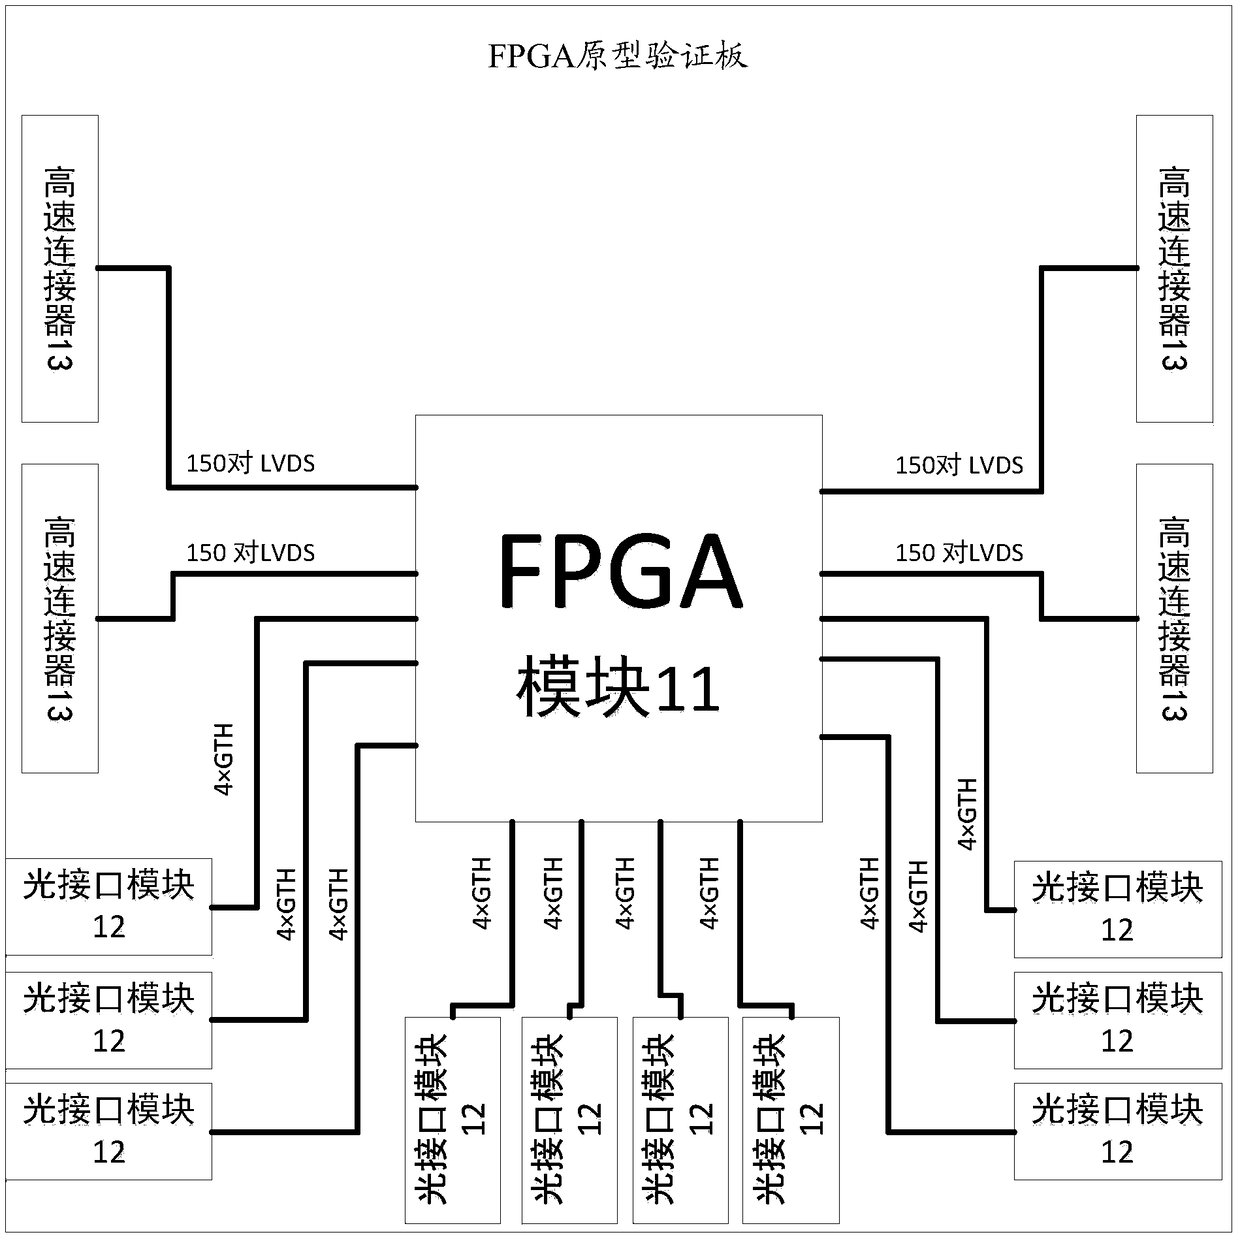 FPGA prototype verification system